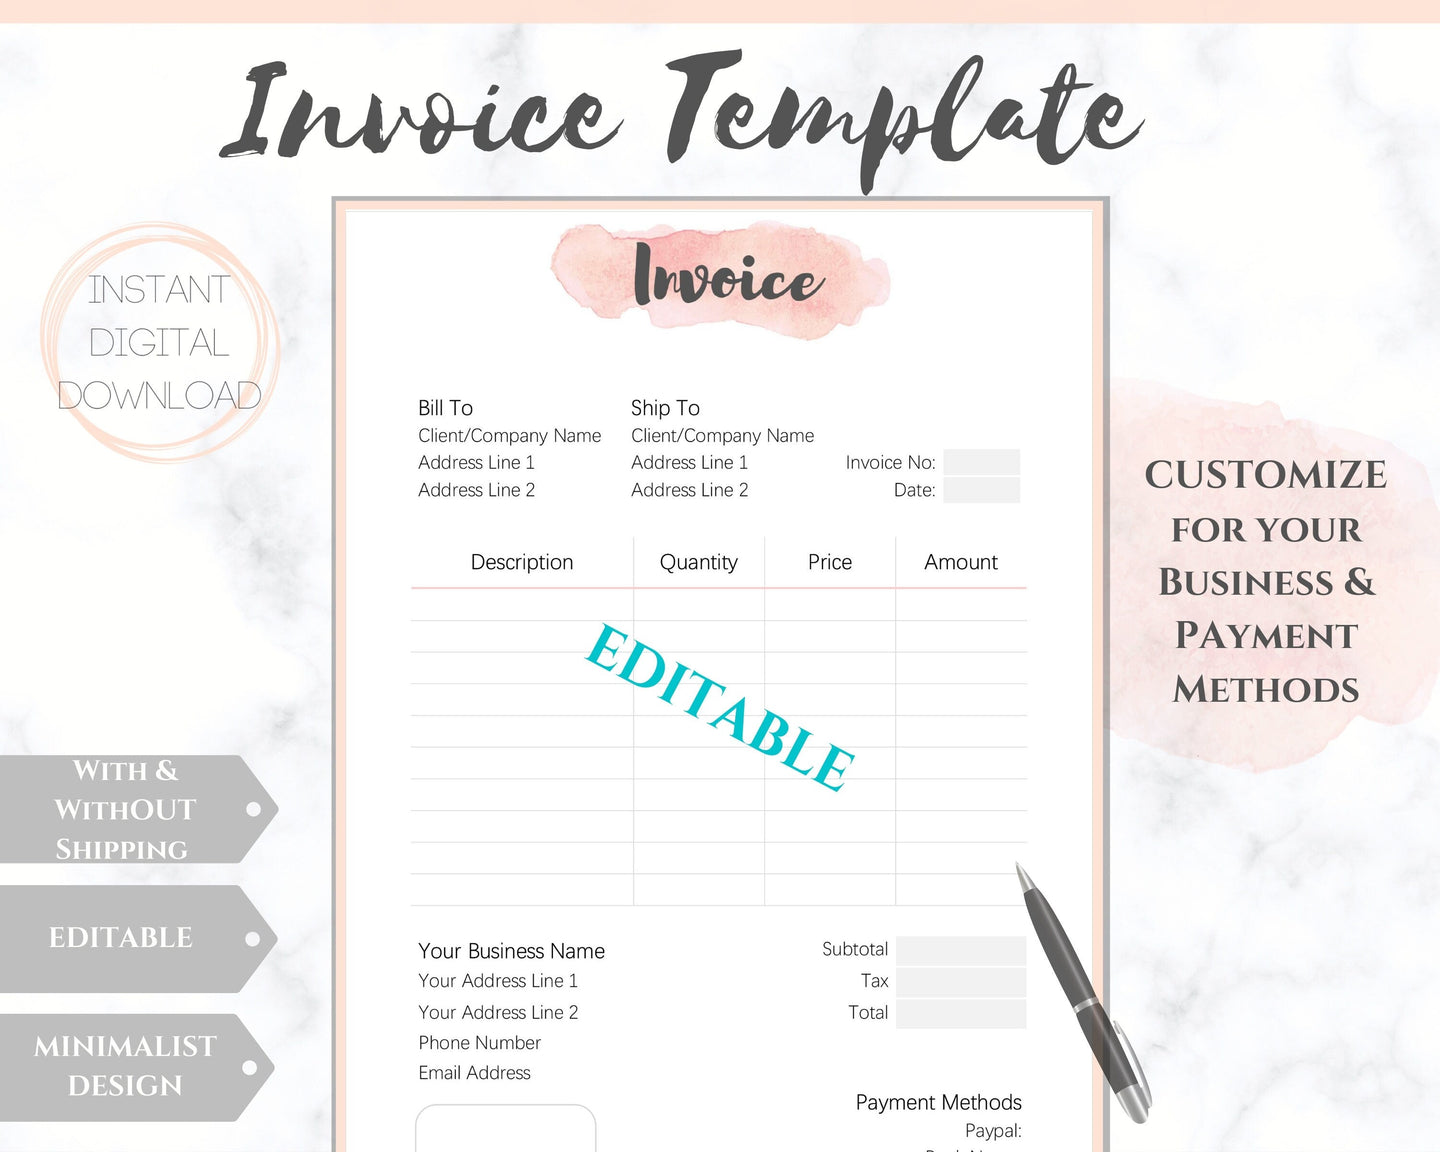 INVOICE TEMPLATE Order Form, EDITABLE Custom Receipt Template, Printable Customer Sales Order Invoice, Receipt Invoice Business form planner | Style 11